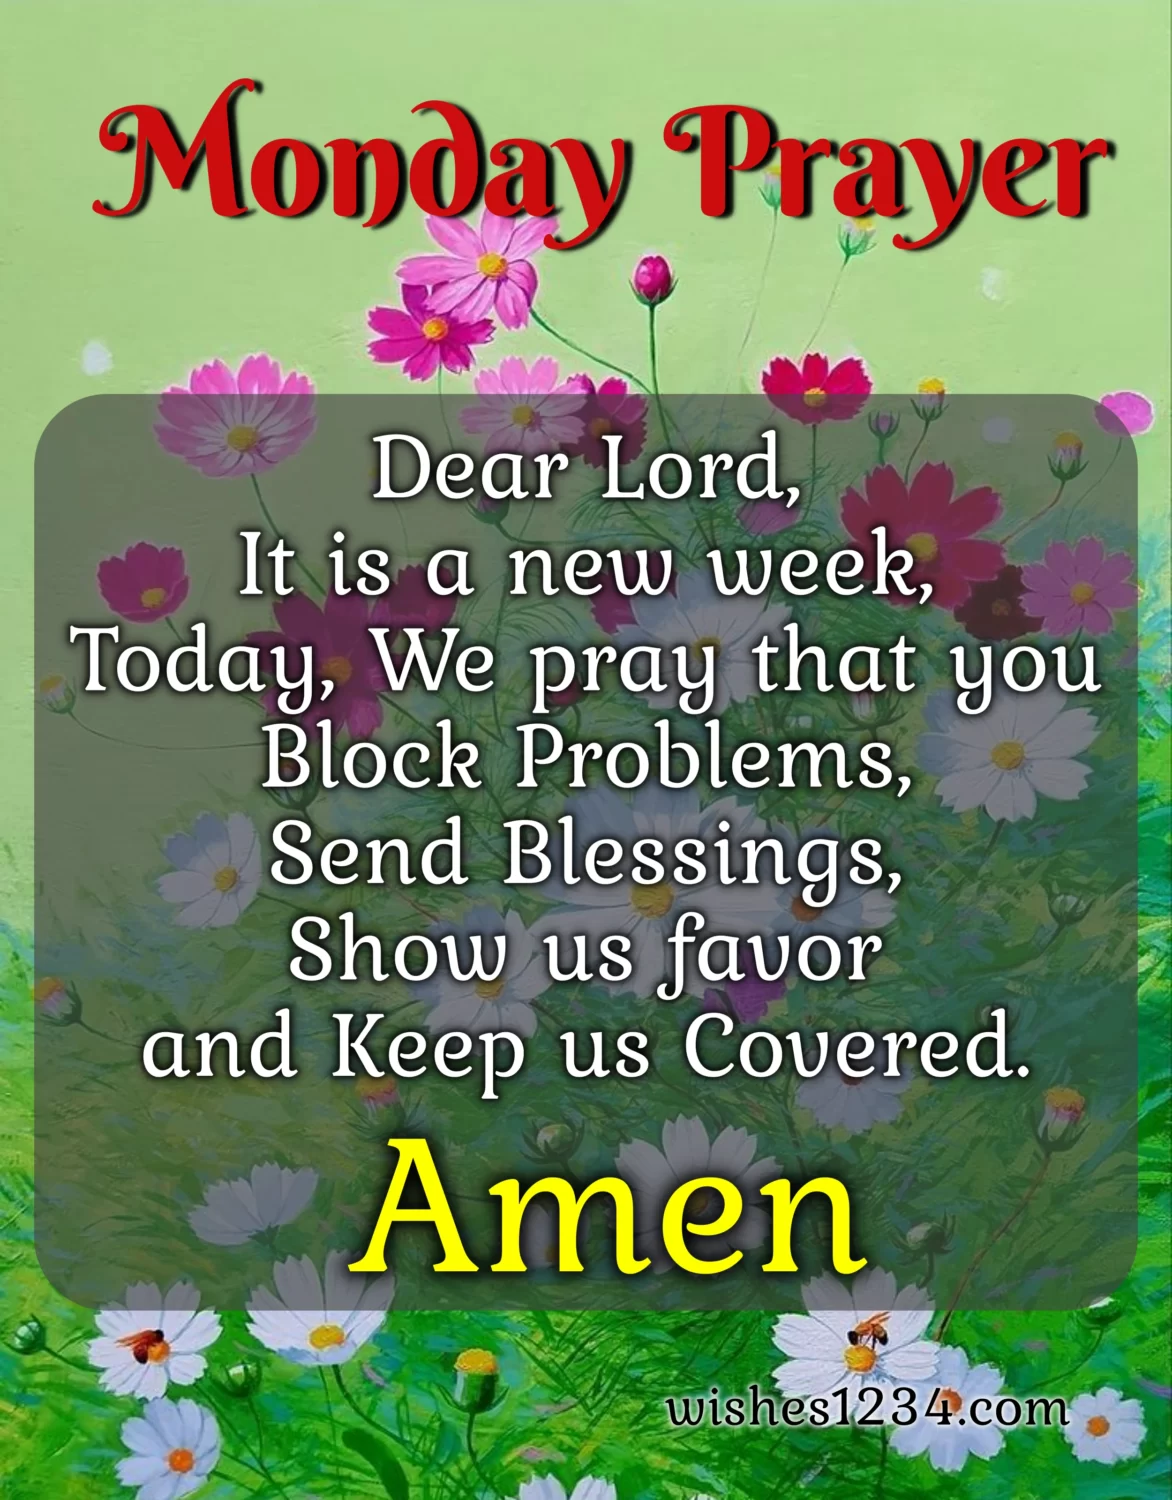 Monday prayer with daisy flowers background, Happy Monday image.